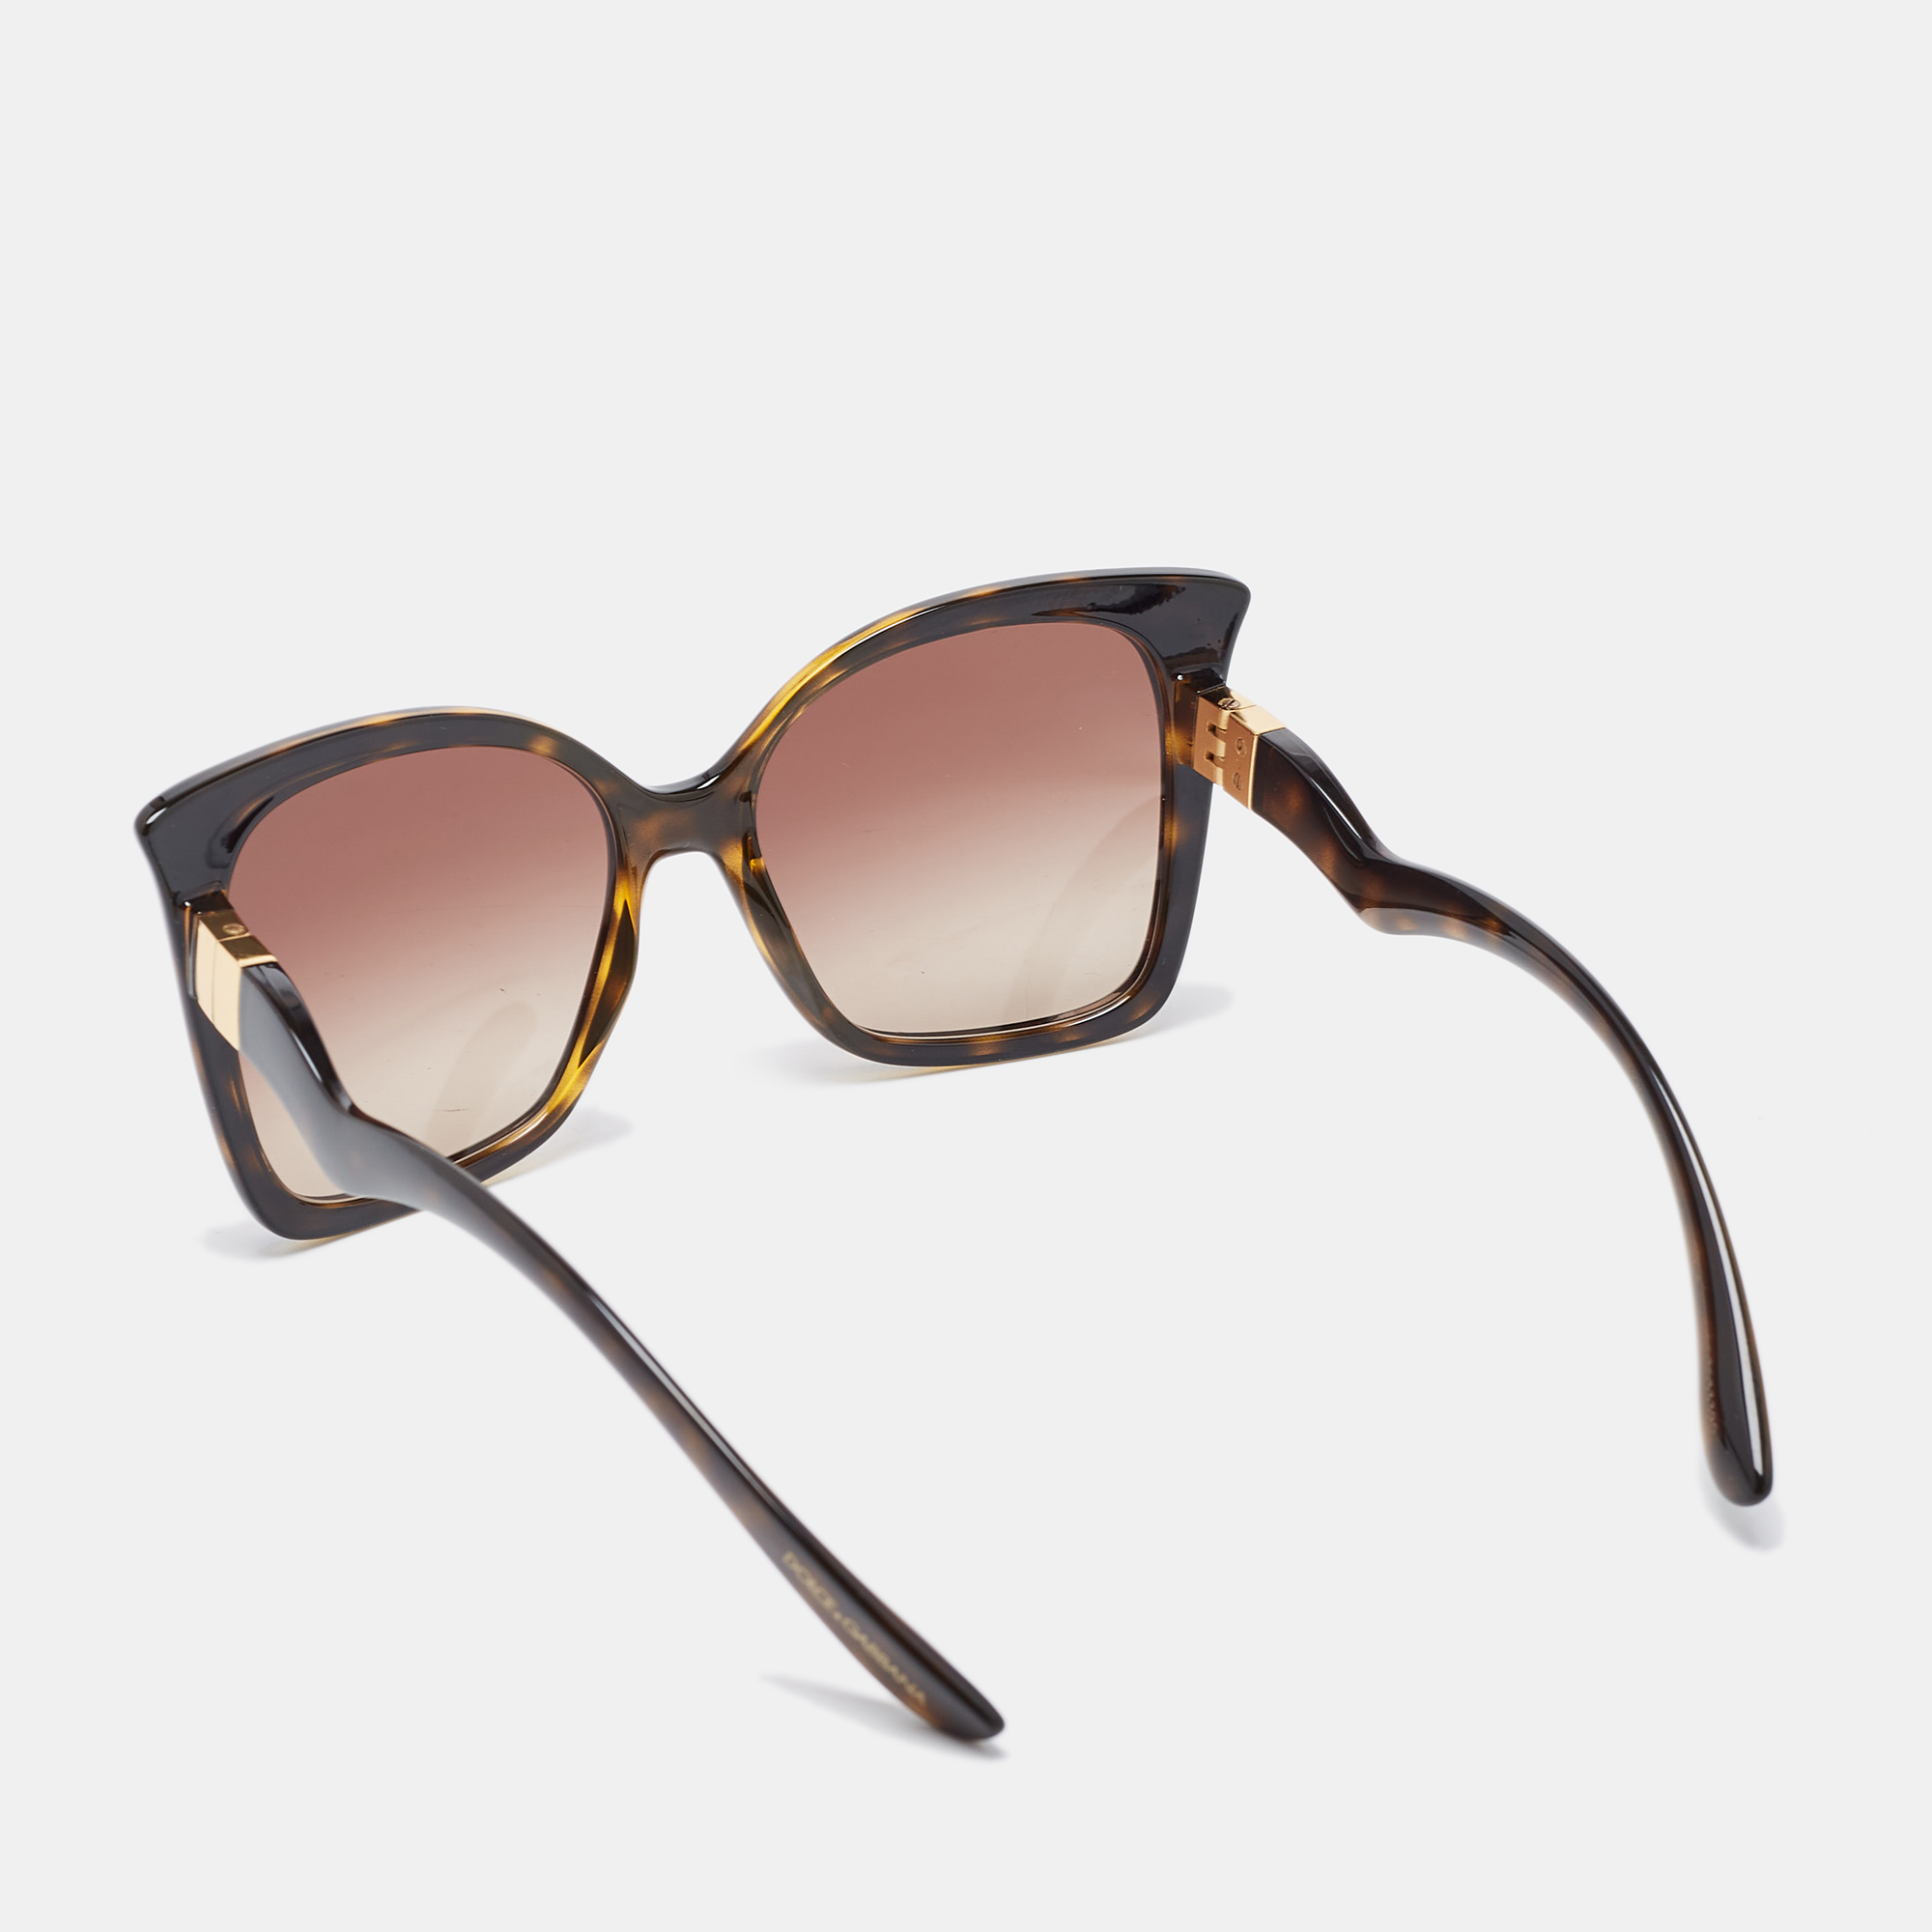 Dolce & Gabbana Brown Tortoise Gradient DG6168 Butterfly Sunglasses